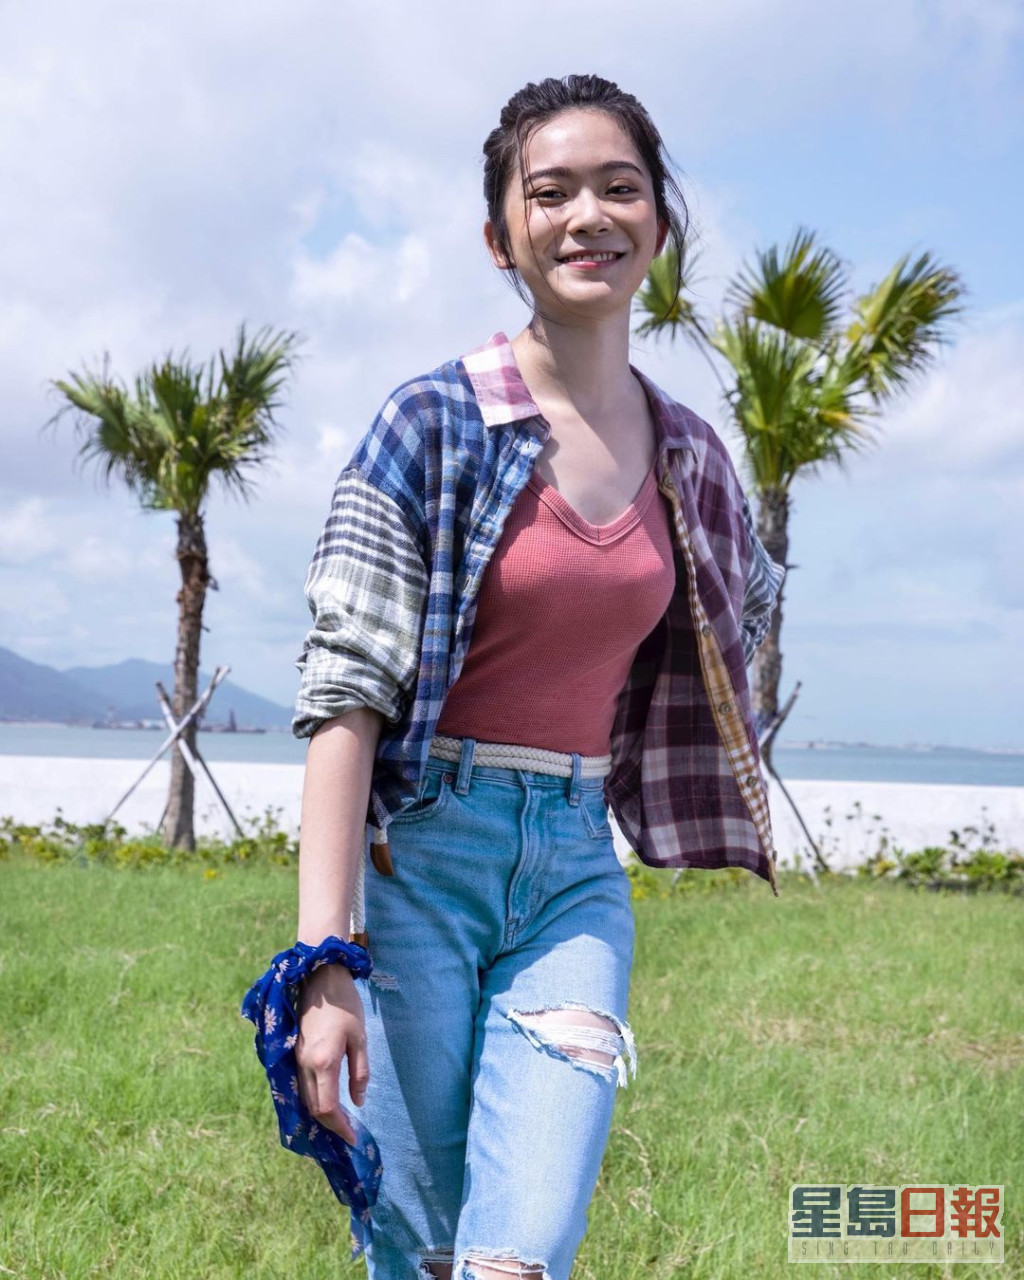 Cloud雲浩影去年曾演出電影《深宵閃避球》，不過這次並她首次接觸影視圈，原來早在2014年她已演出過TVB劇《新抱喜相逢》。